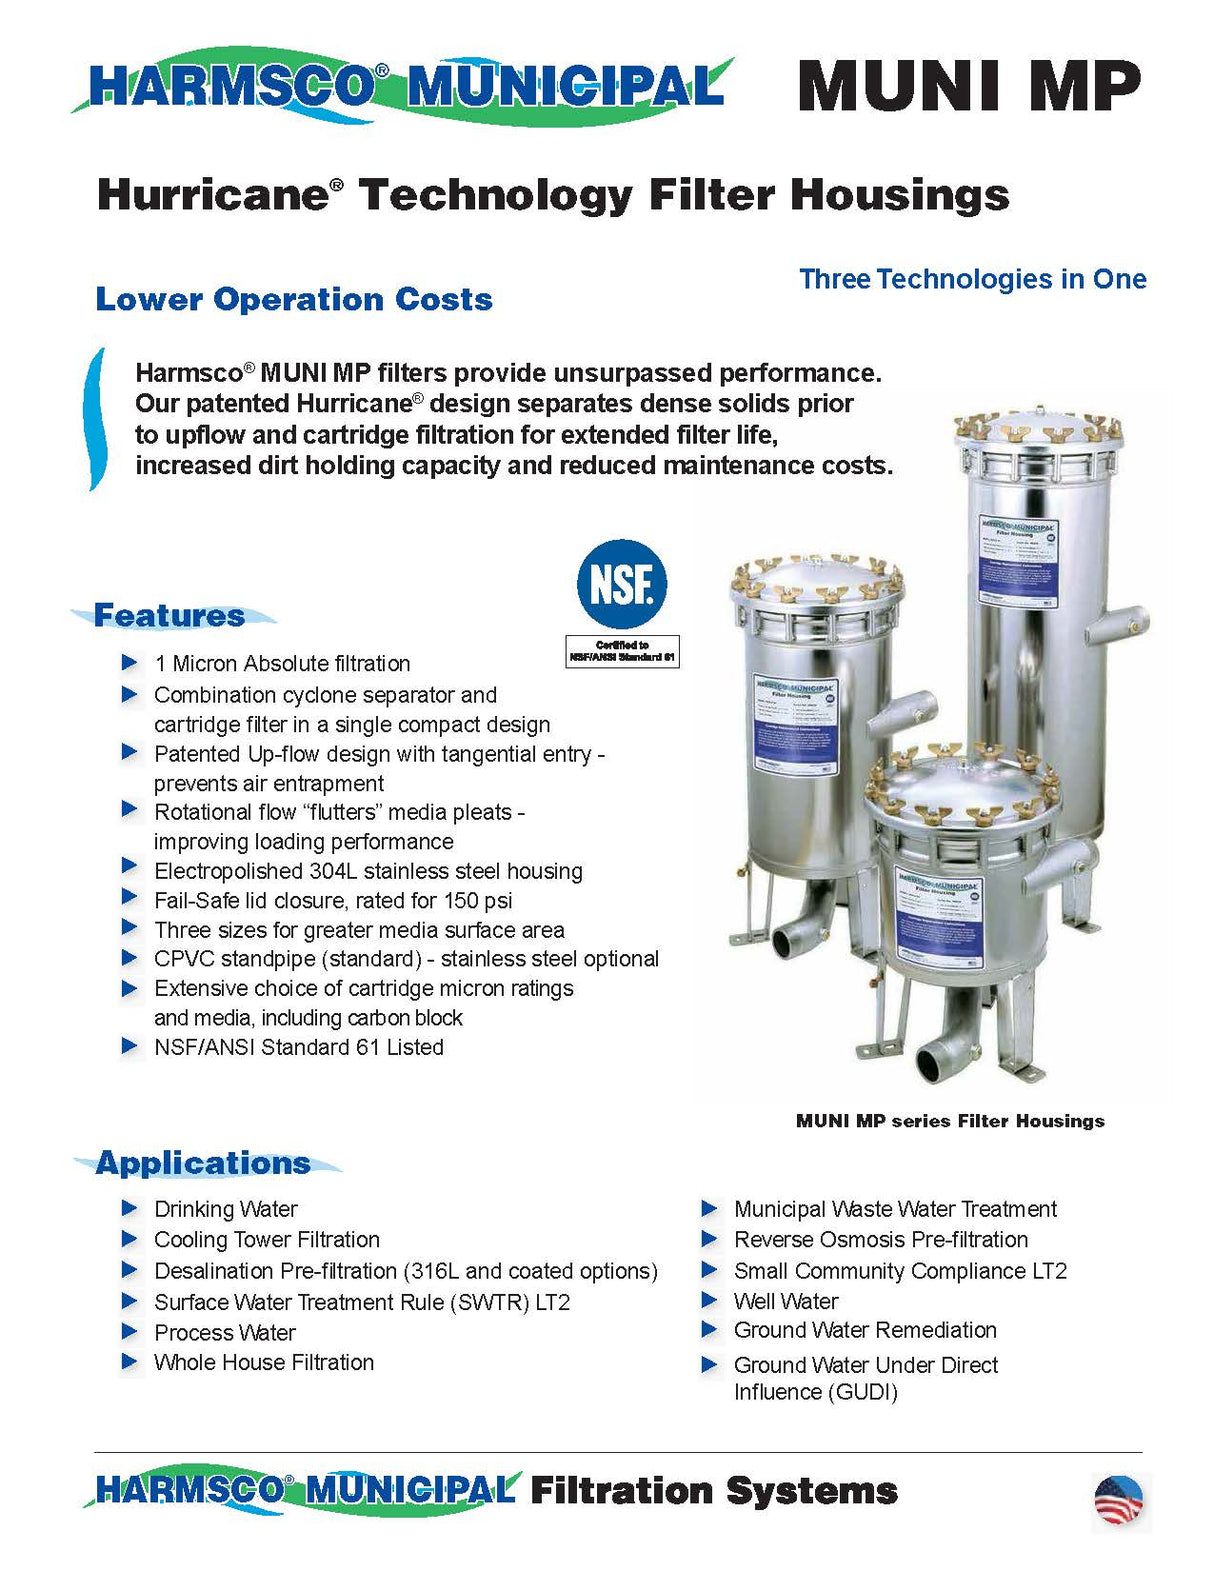 HARMSCO® MUNI MP Hurricane® Technology Filter Housings